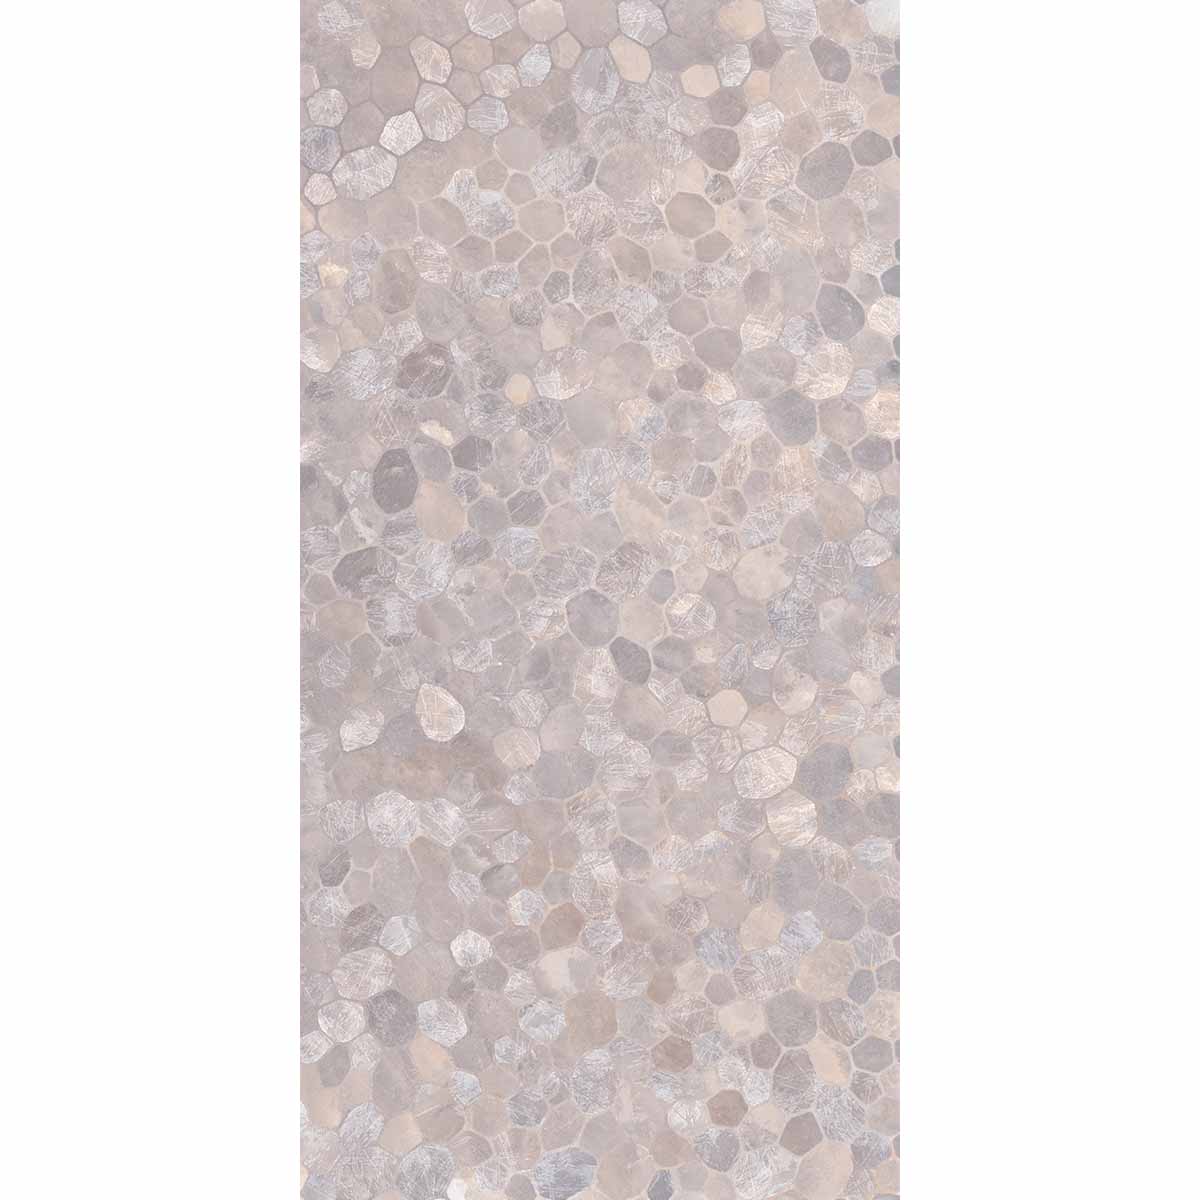 Riviera Onyx Purple Rock Salt Effect Decor Mosaic Wall Porcelain Tile 60x120cm Matt